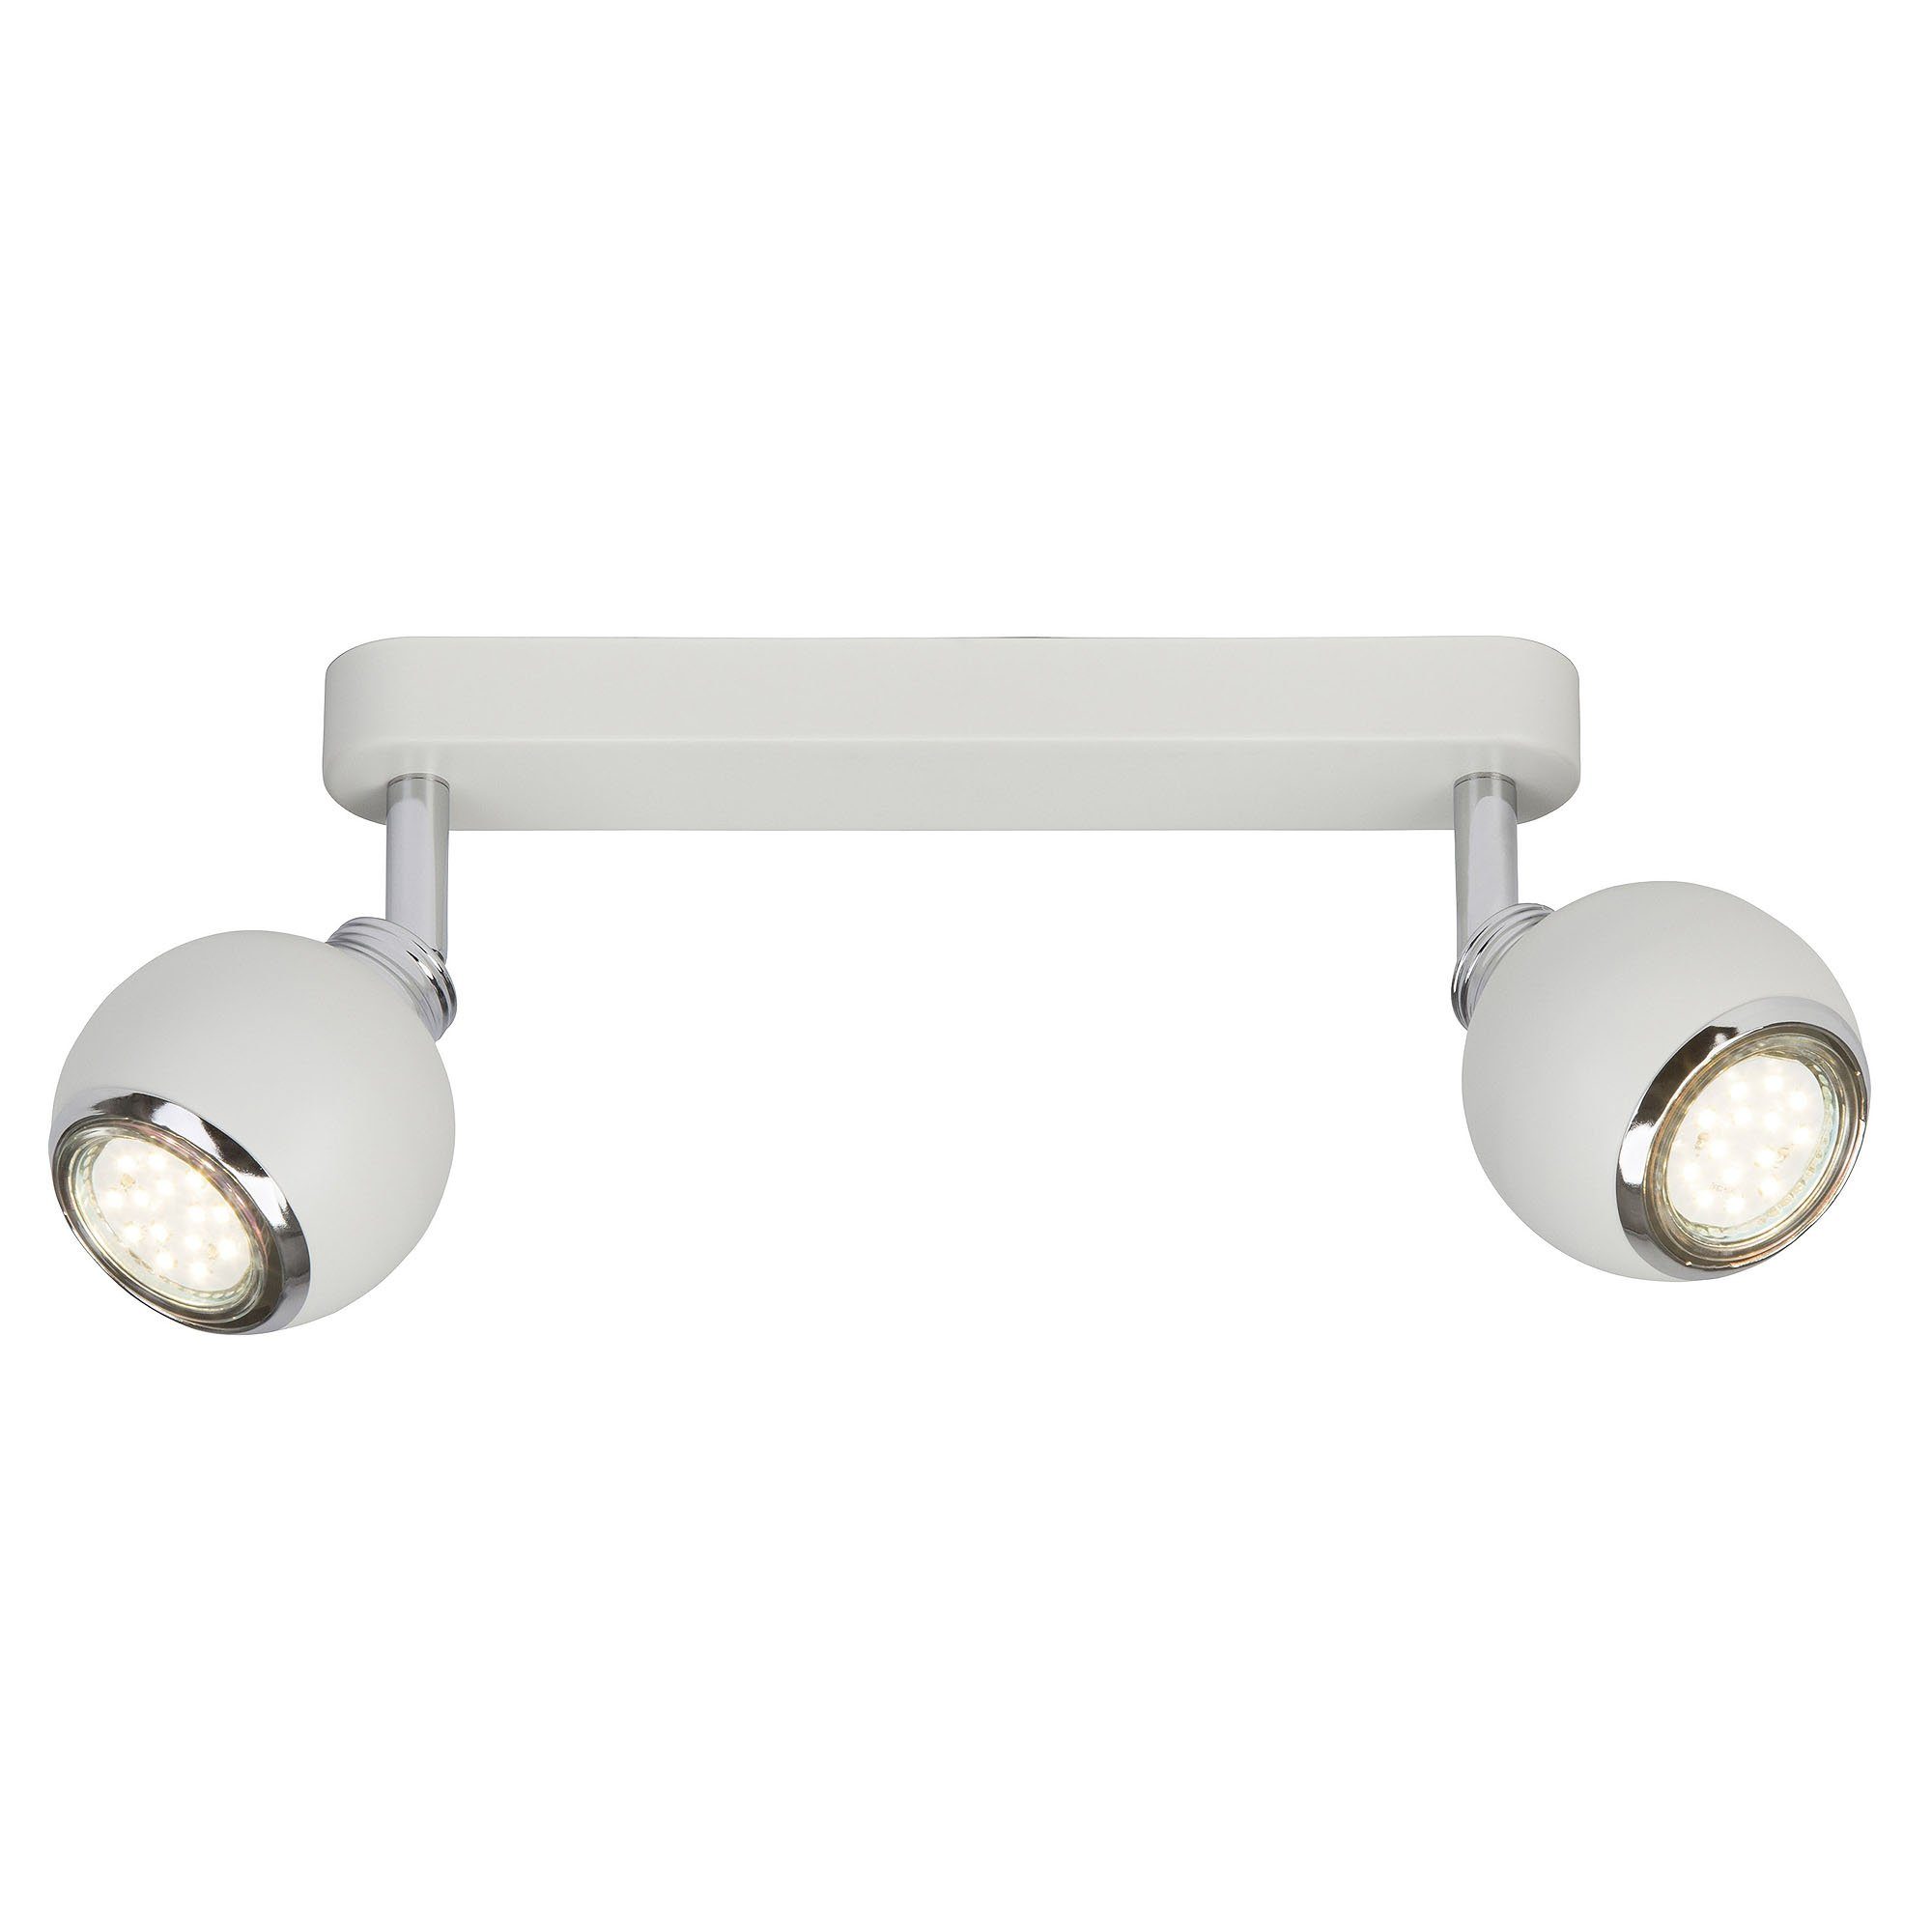 Spotbalken LED -PAR51, Ina, Brilliant LED- weiß/chrom 3W Deckenleuchte 2flg Lampe Ina GU10, 2x LED